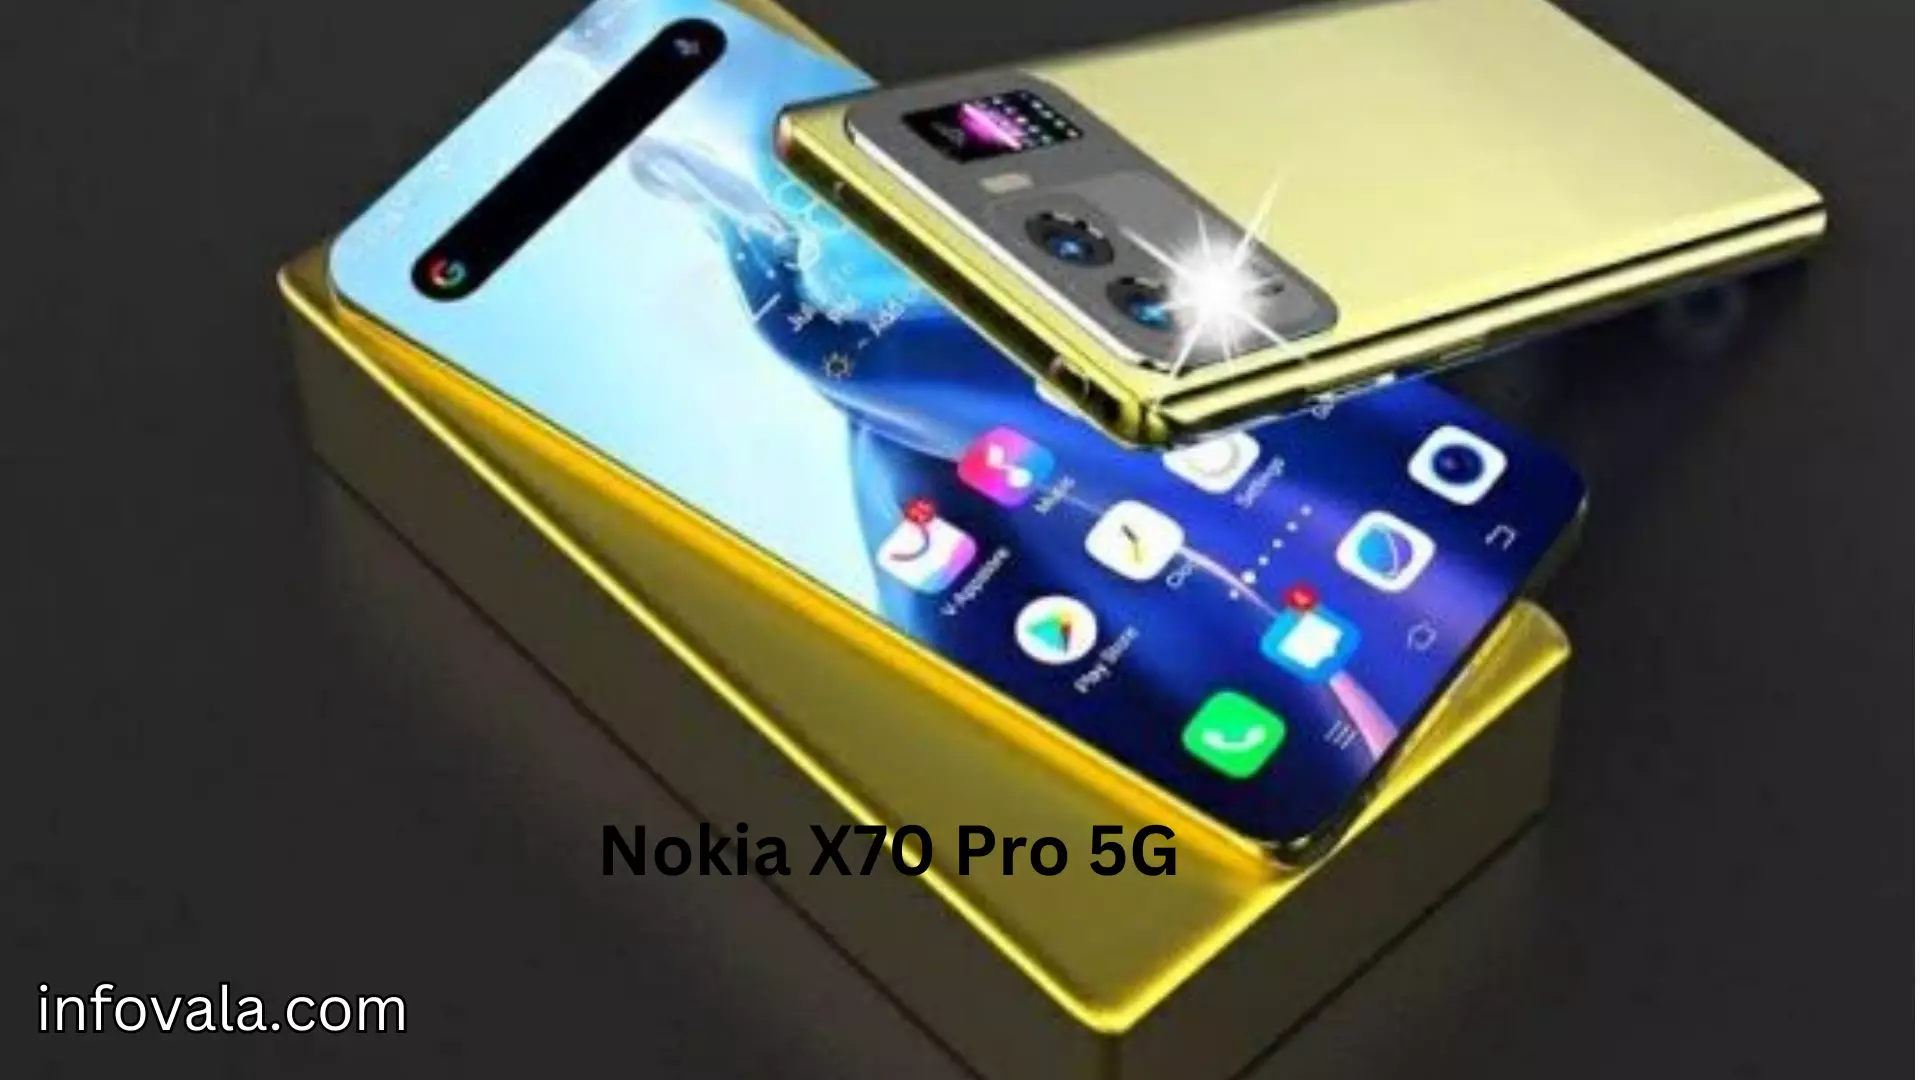 Nokia X70 Pro 5G